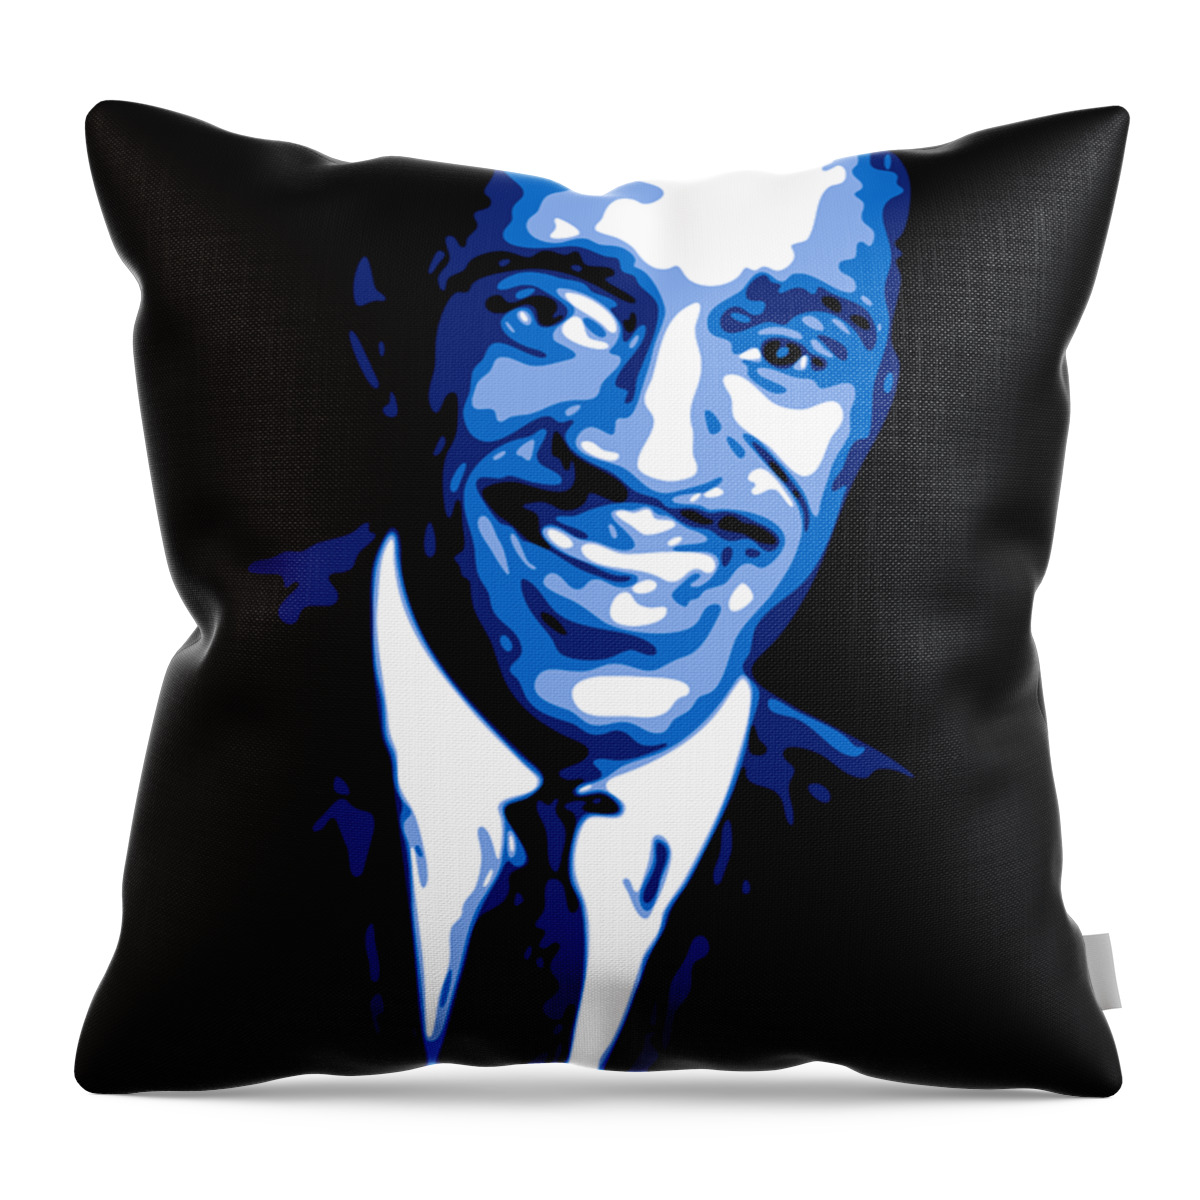 Sammy Davis Jr. Throw Pillow featuring the digital art Sammy Davis by DB Artist